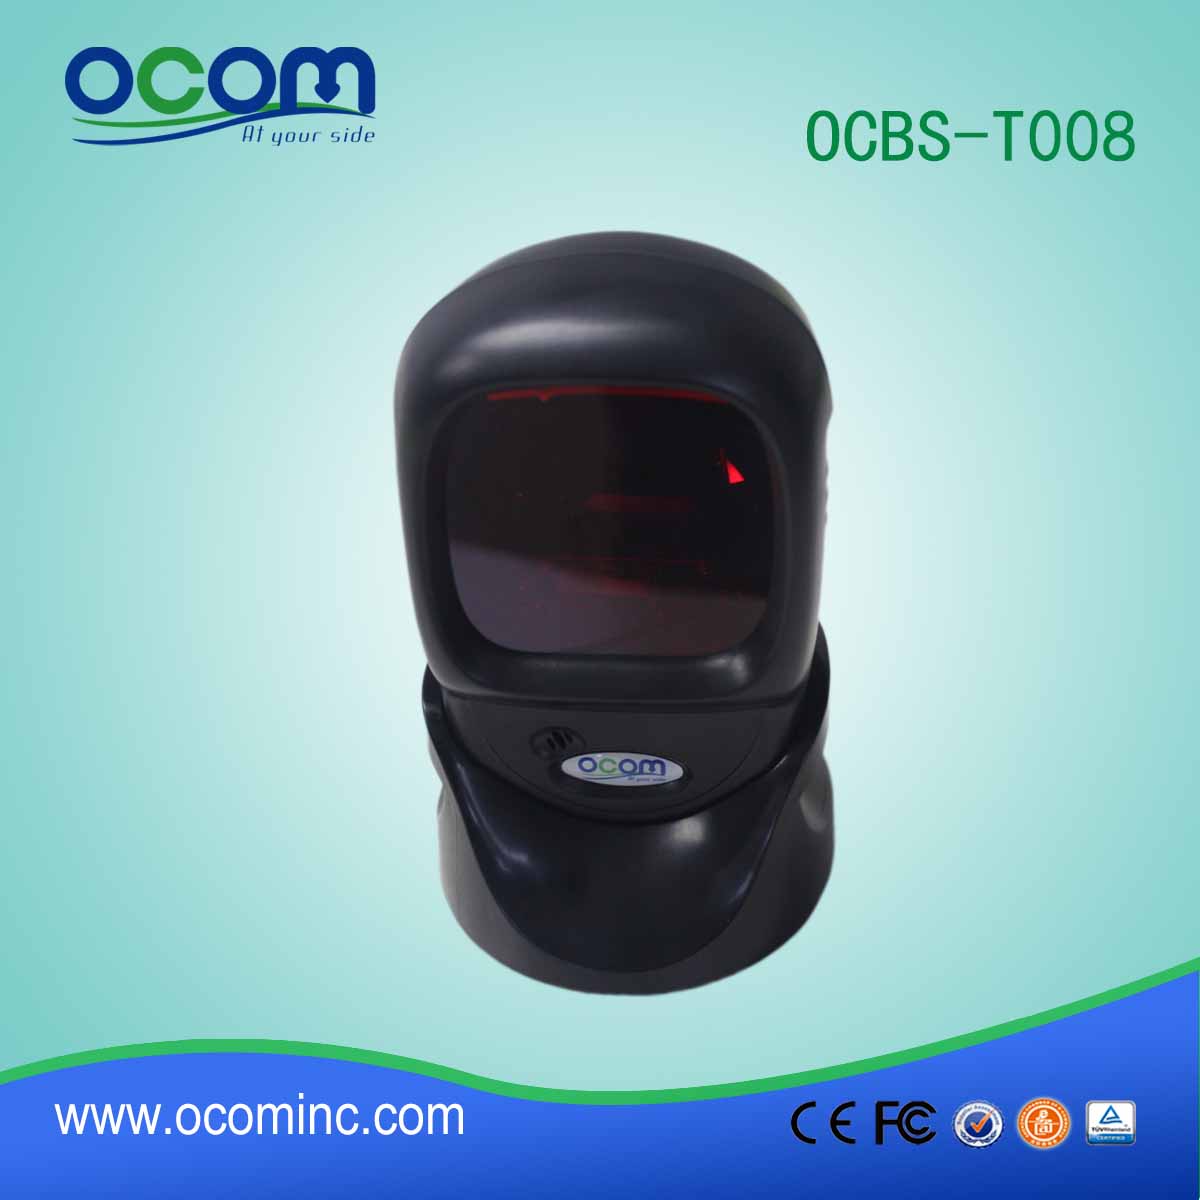 OCBs-T008 Desktop Αρωγής Laser Scanner Ετικέτα για σούπερ μάρκετ Ταμείο